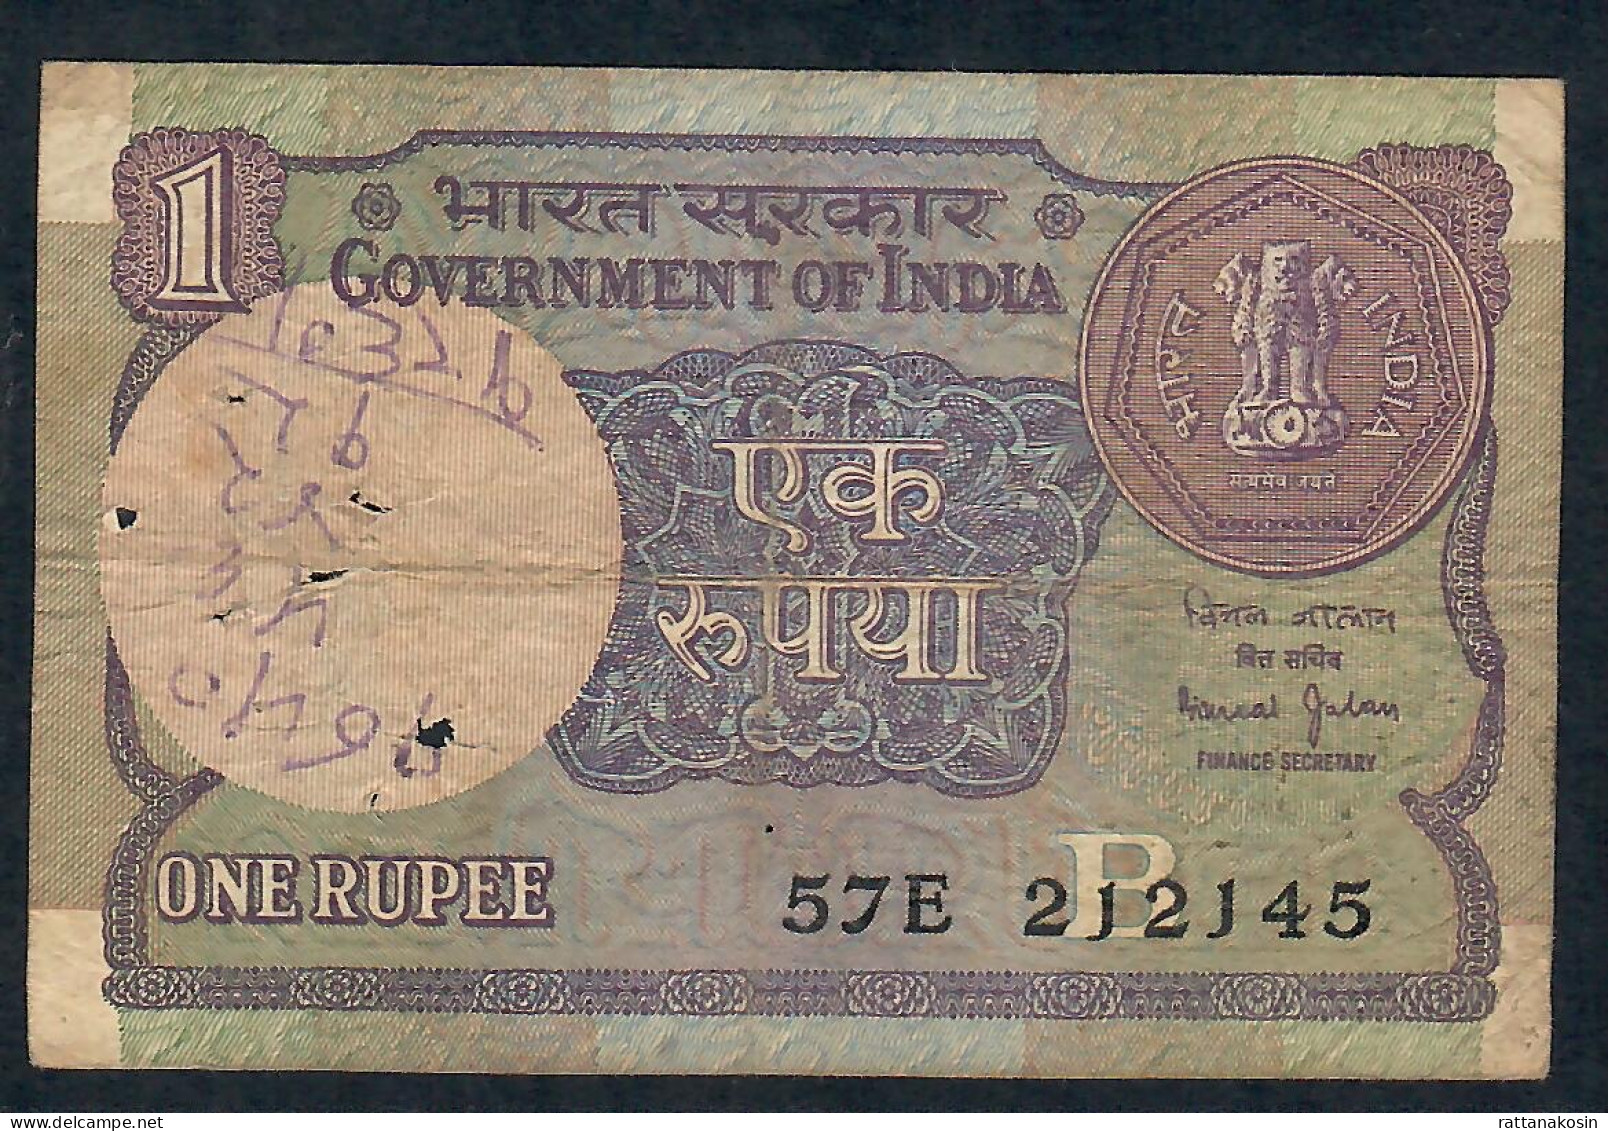 INDIA P78Aj 1 RUPEE 1990  LETTER B Signature JALAN #57E   FINE - Inde